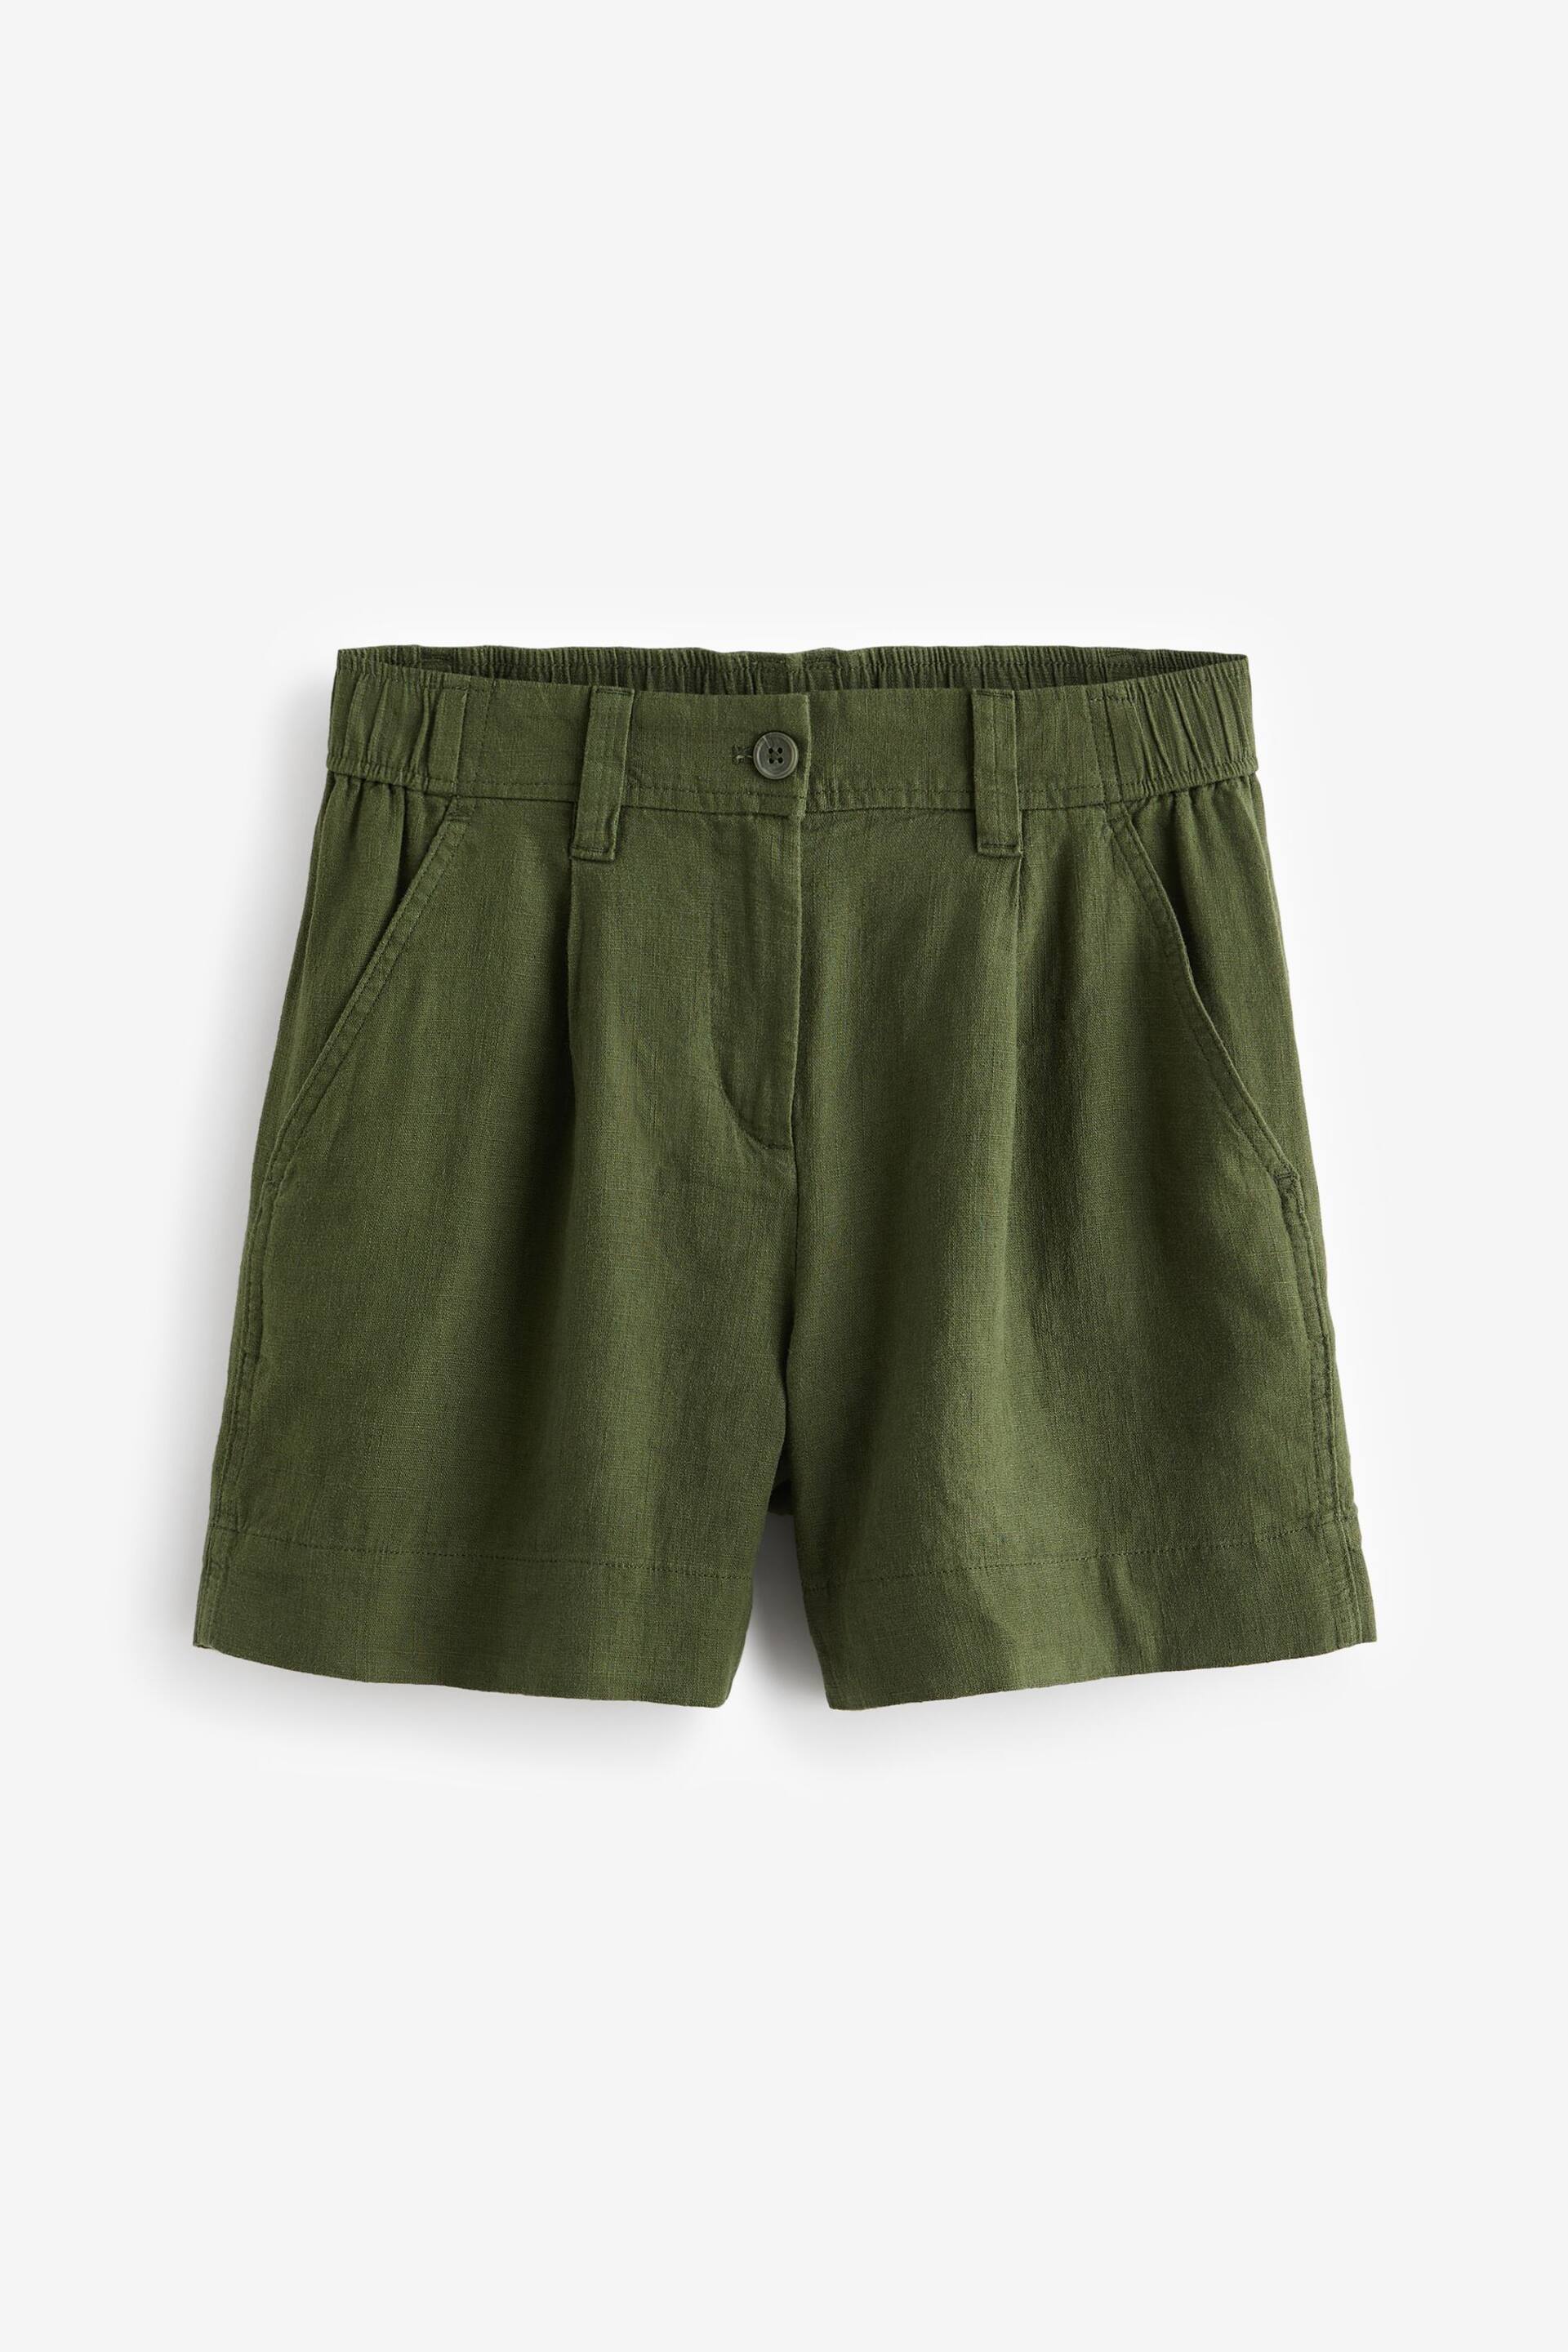 Khaki Green Linen Blend Boy Shorts - Image 5 of 6